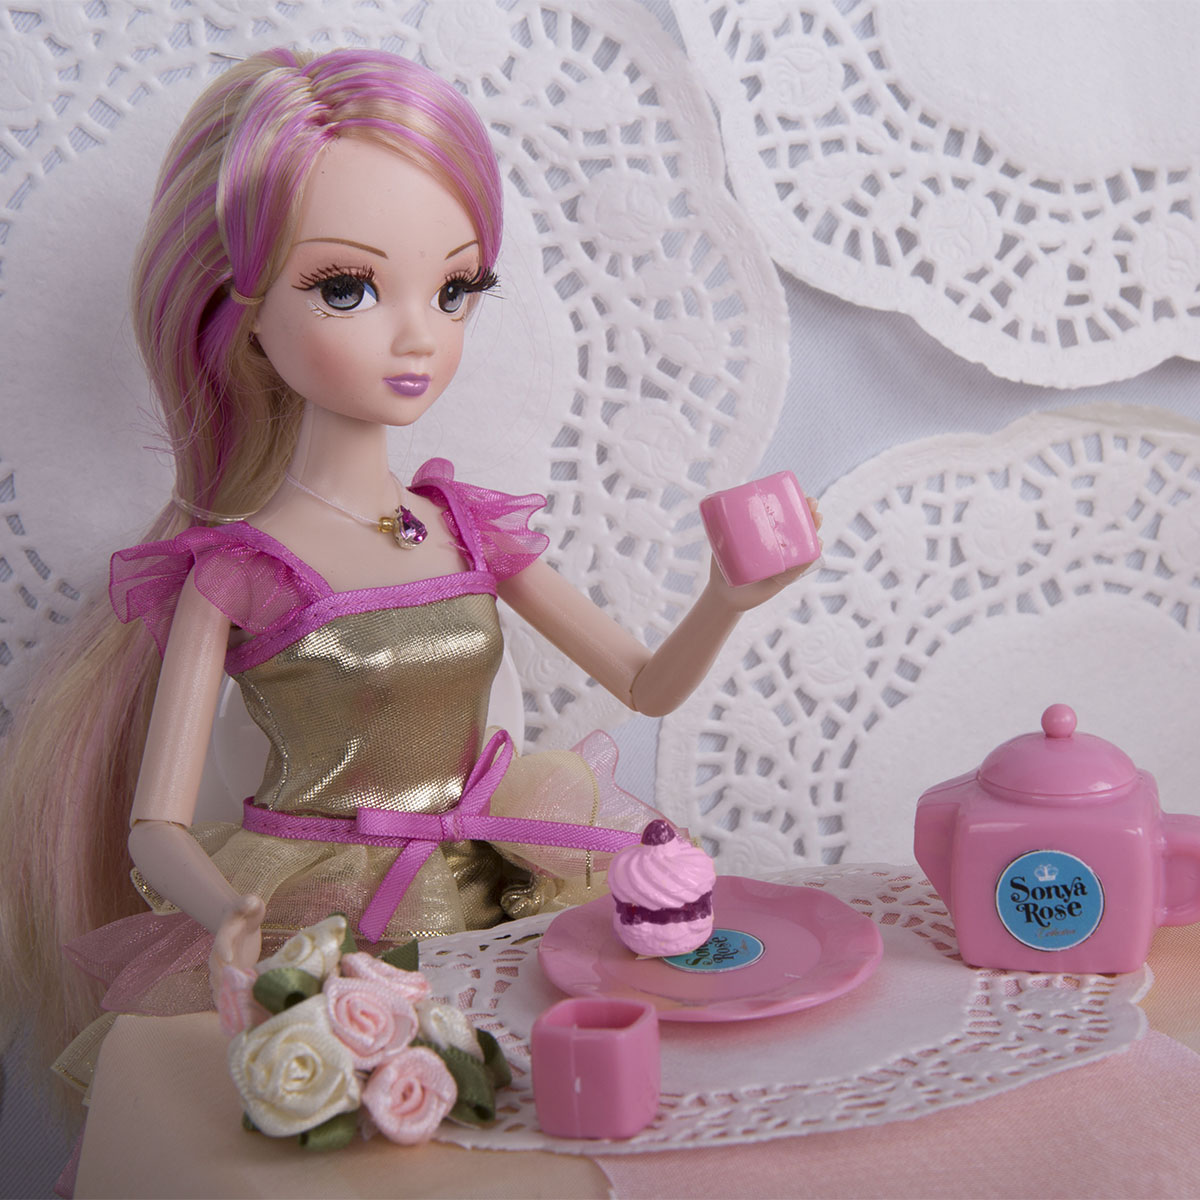 Кукла Sonya Rose, серия "Daily  collection",  Чайная вечеринка R4332N - фото 3